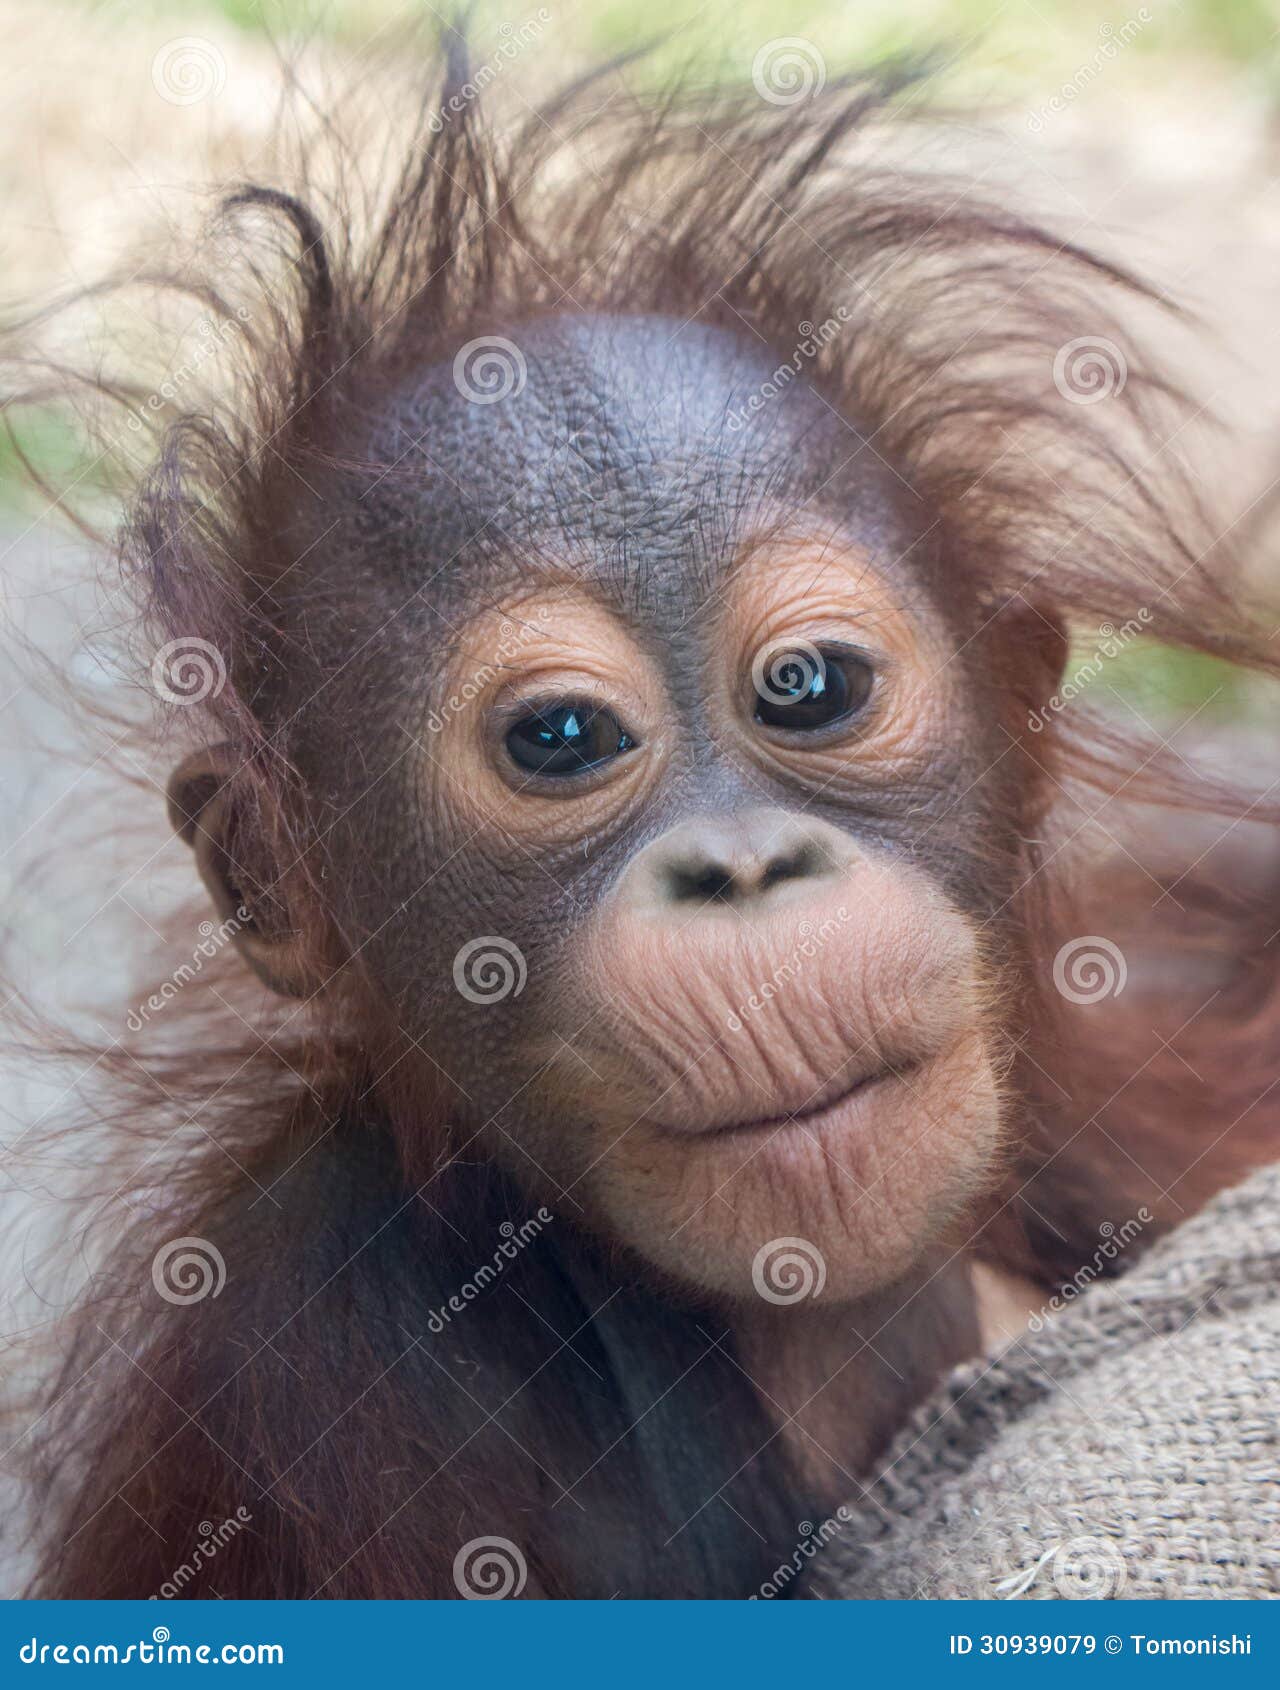 orangutan - baby with funny face